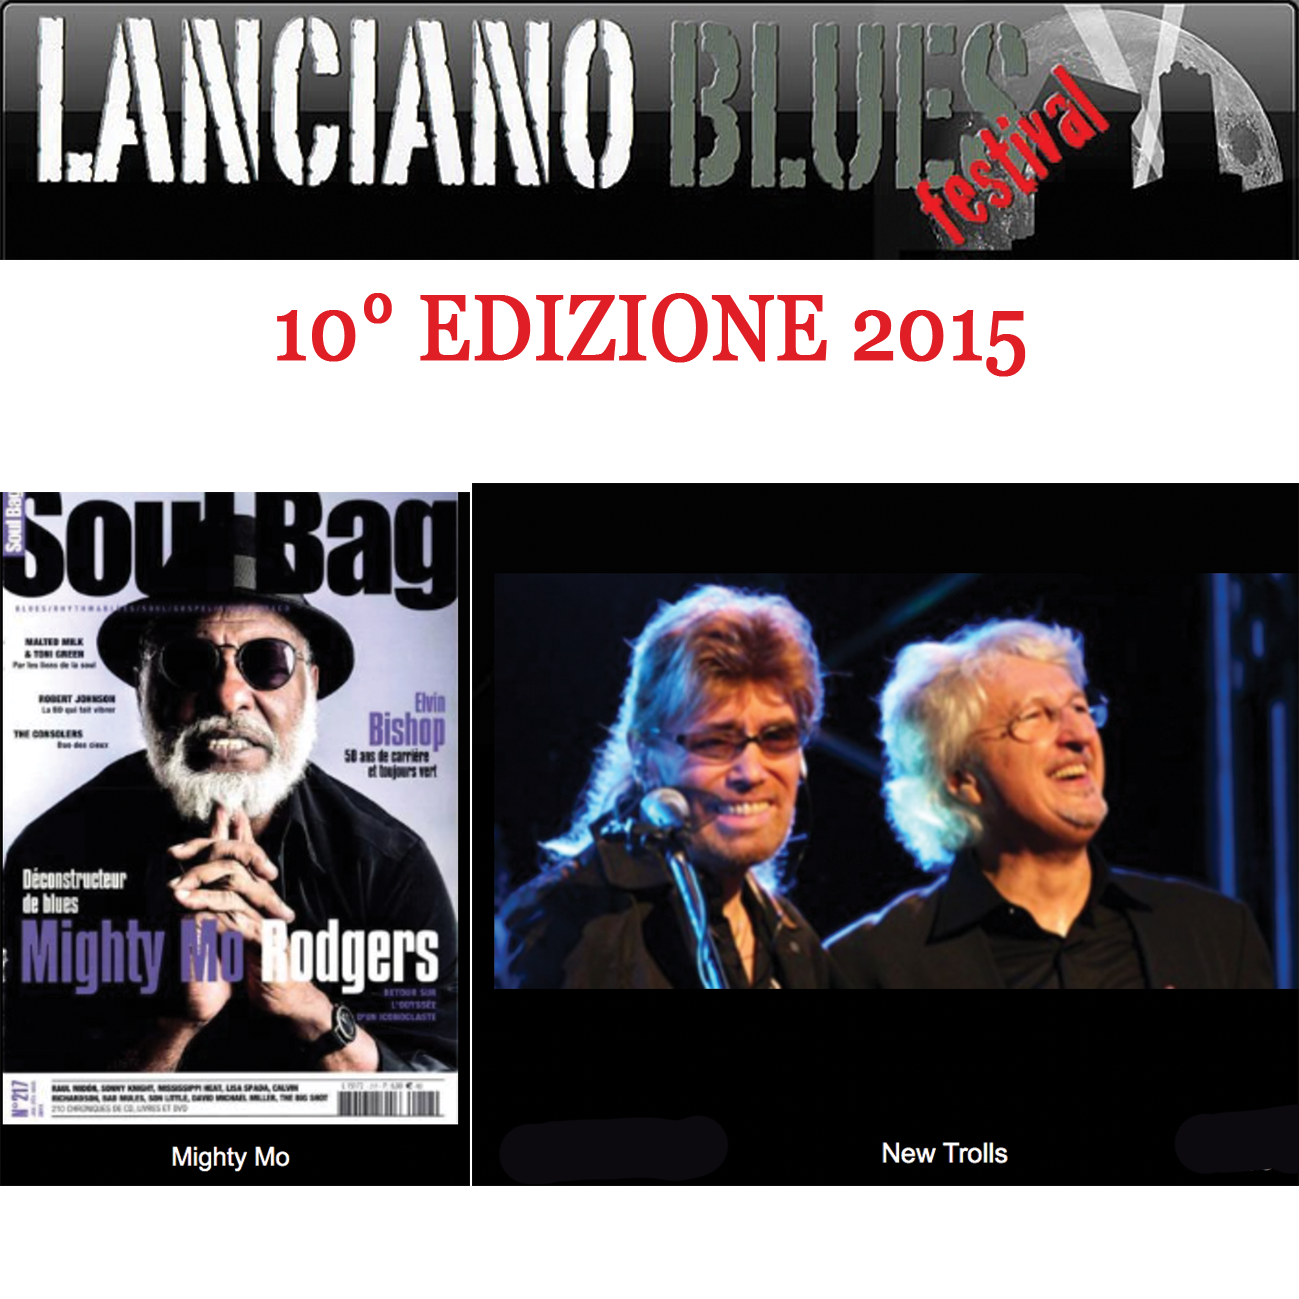 LANCIANO BLUES FESTIVAL 2015